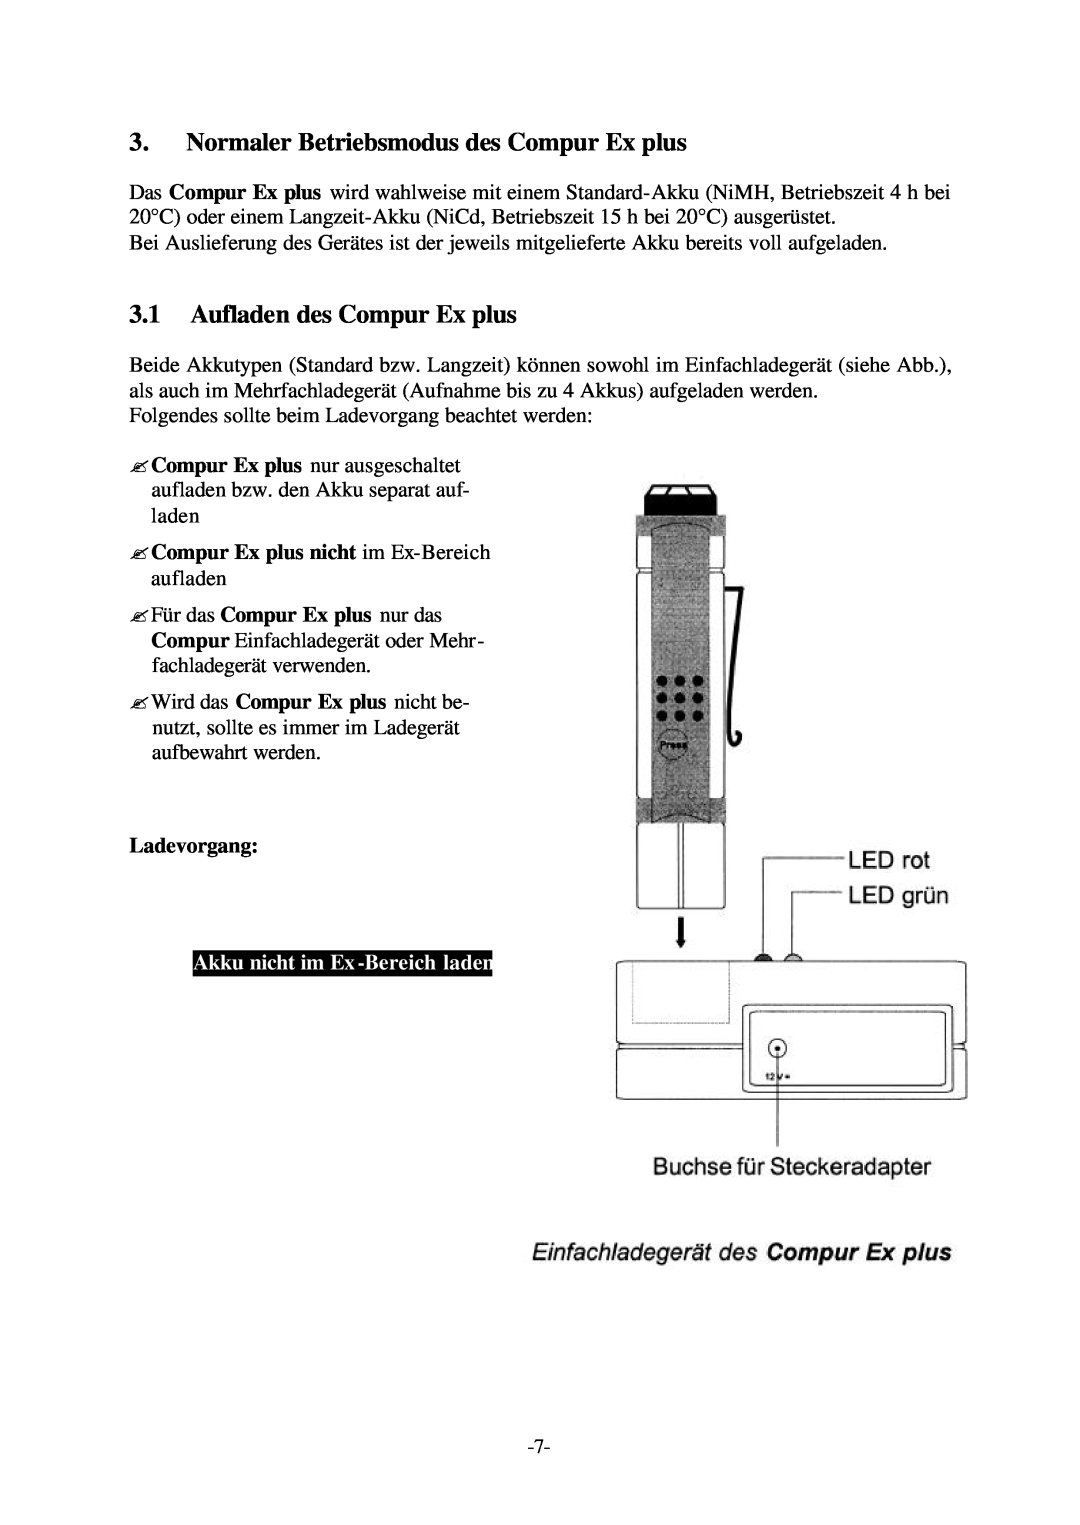 Compur Gas Detector manual Normaler Betriebsmodus des Compur Ex plus, 3.1Aufladen des Compur Ex plus, Ladevorgang 